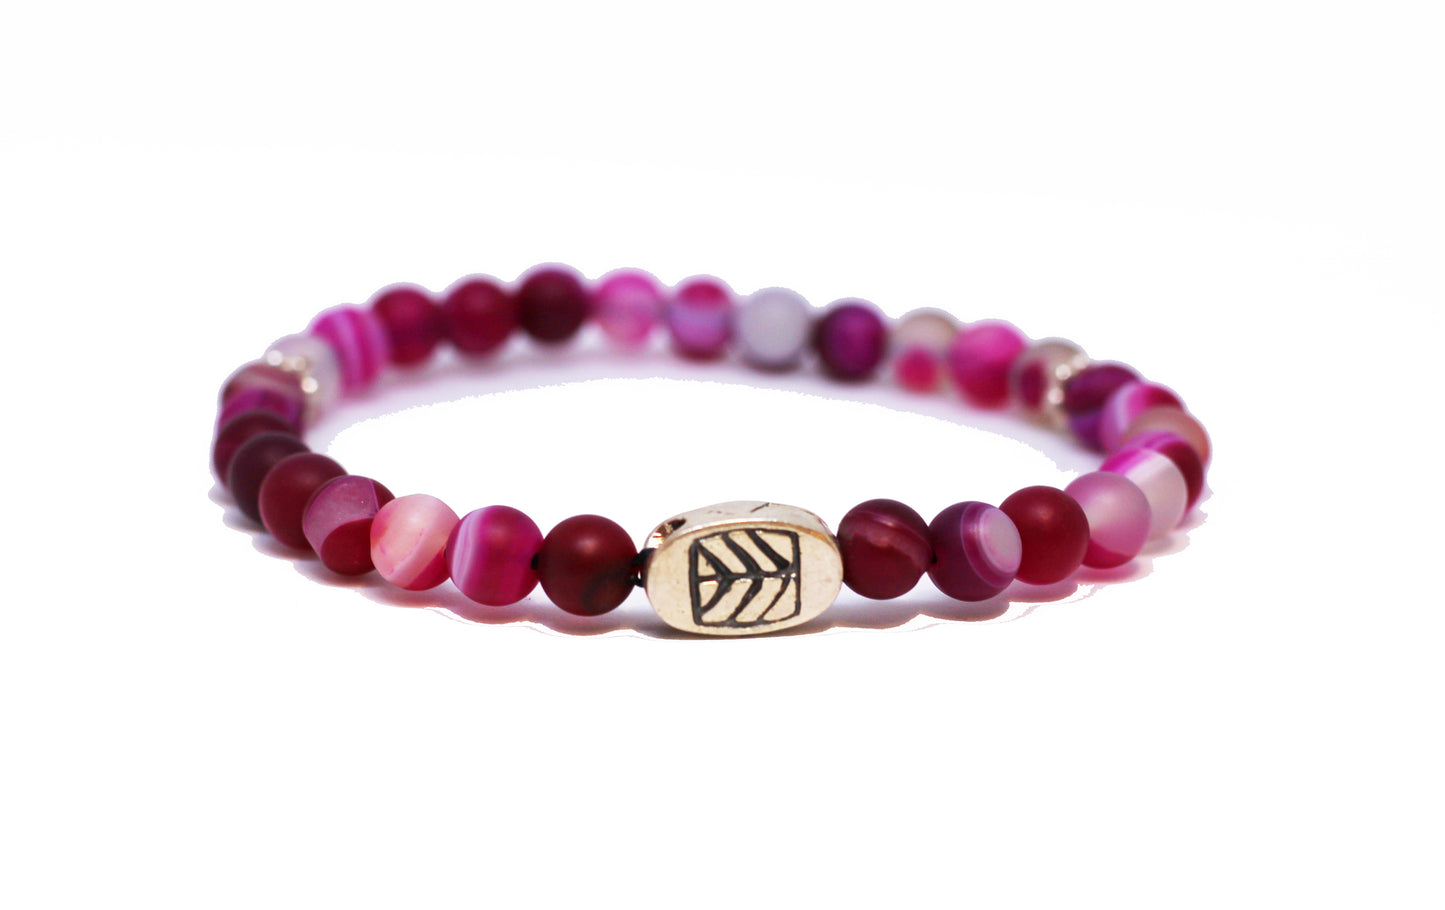 Bloodstone Jewels - Bracelet of semi-precious stones